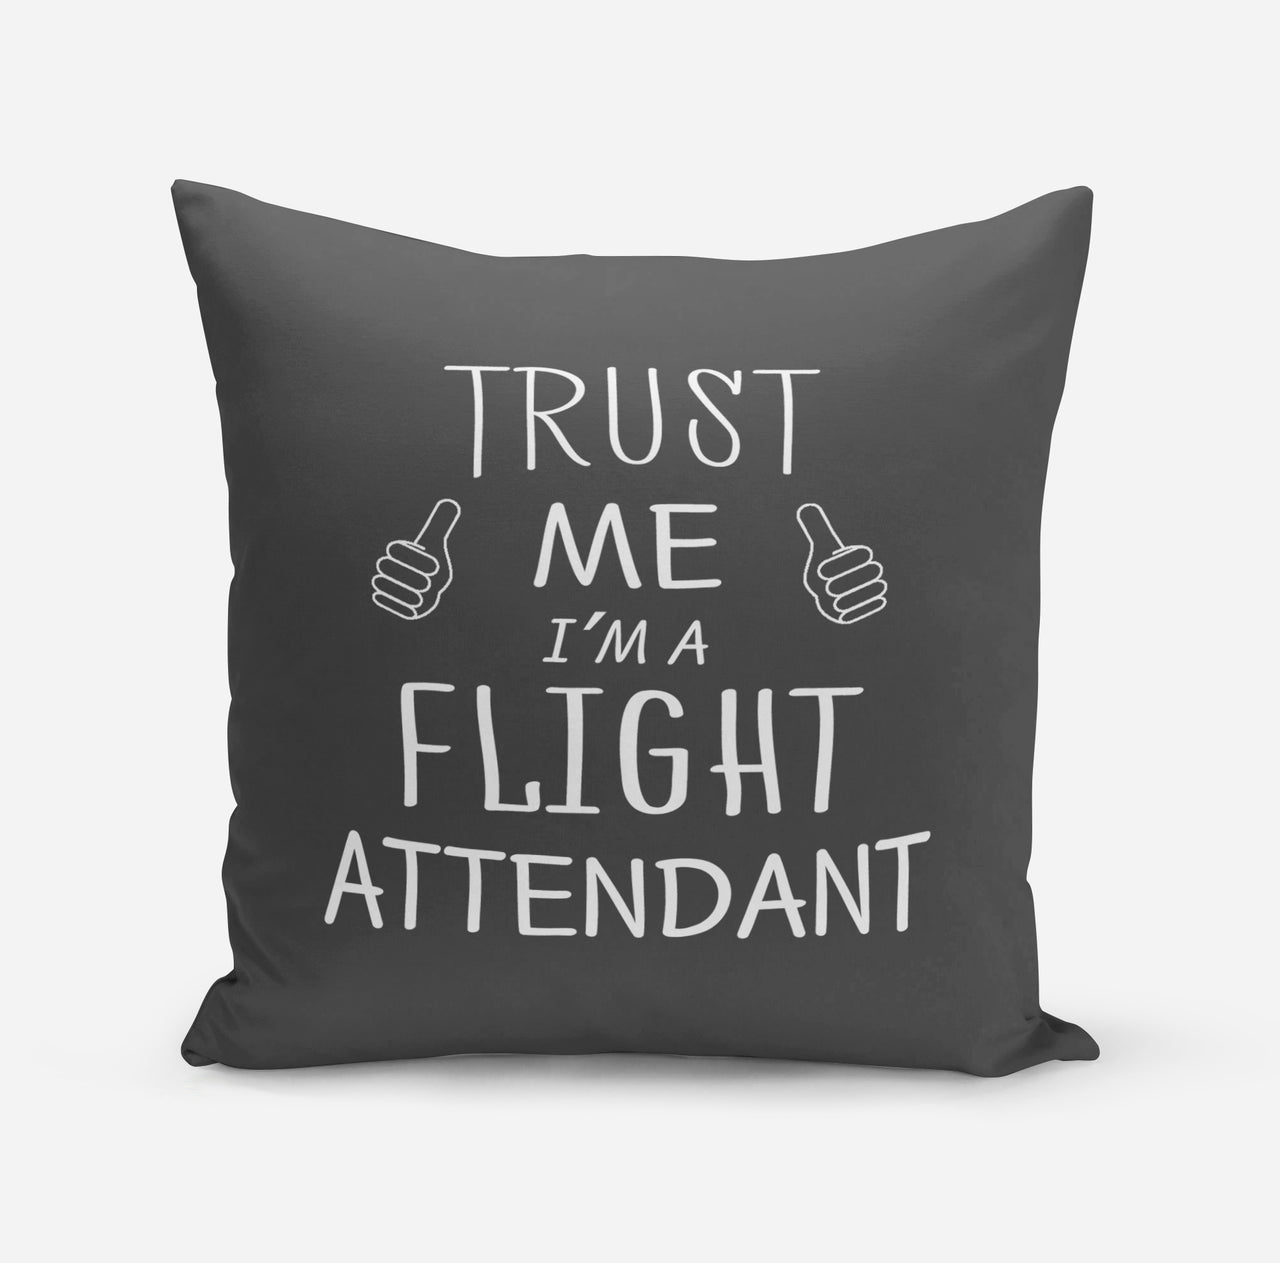 Trust Me I'm a Flight Attendant Designed Pillows